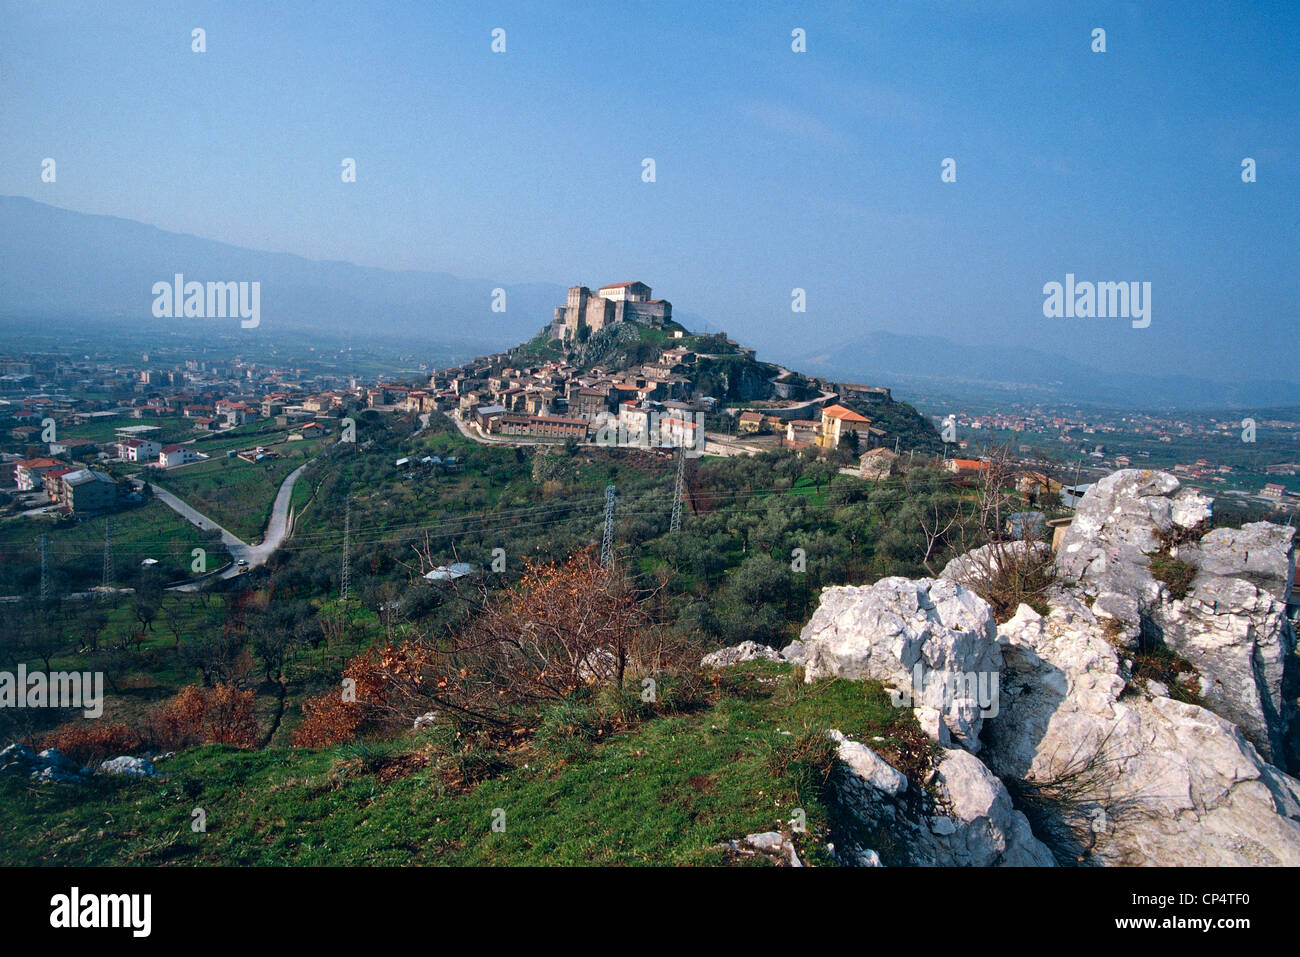 Campania - Montesarchio (BN). Foto de stock